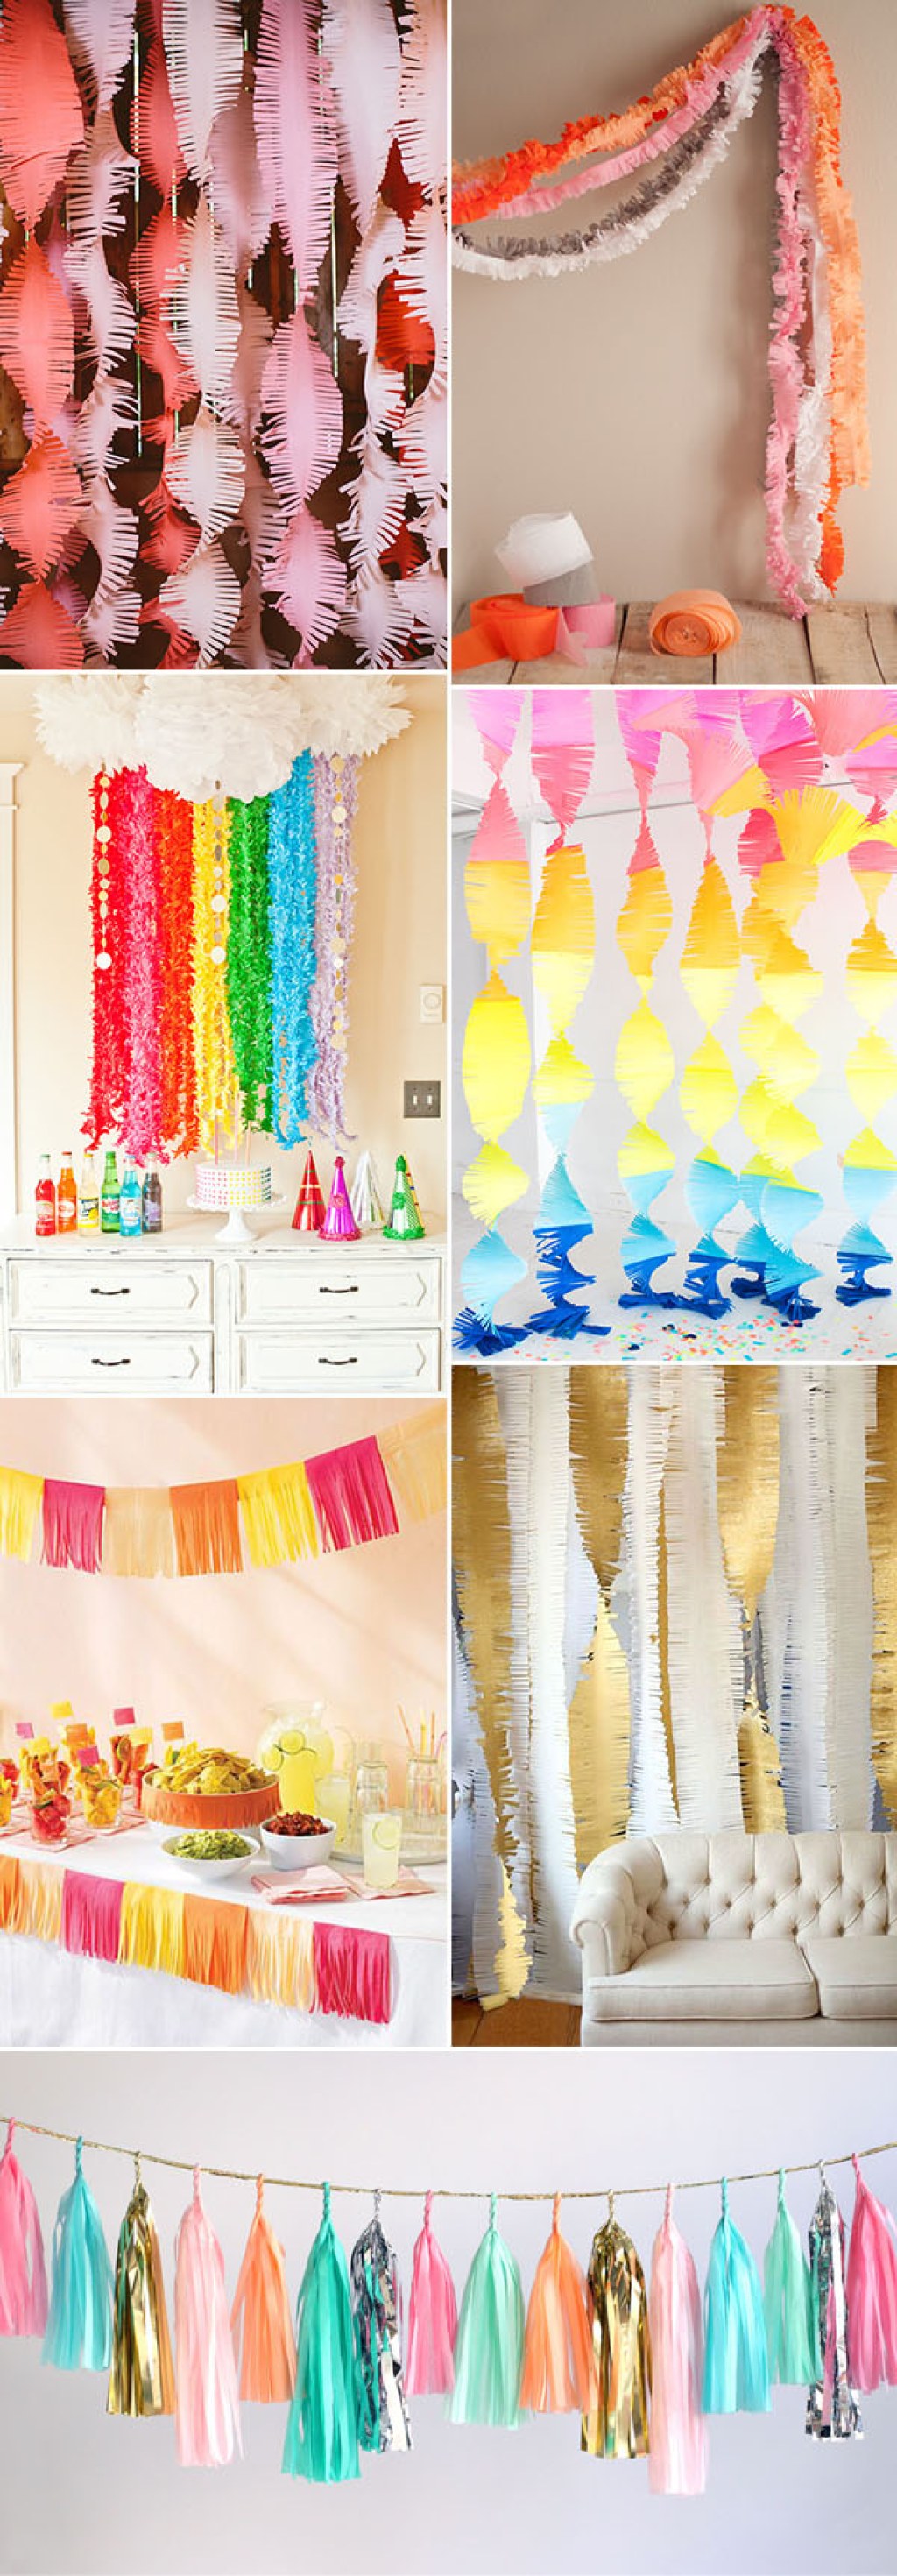 creative easy decoration ideas - Creative & Budget-friendly DIY Wedding Decoration Ideas